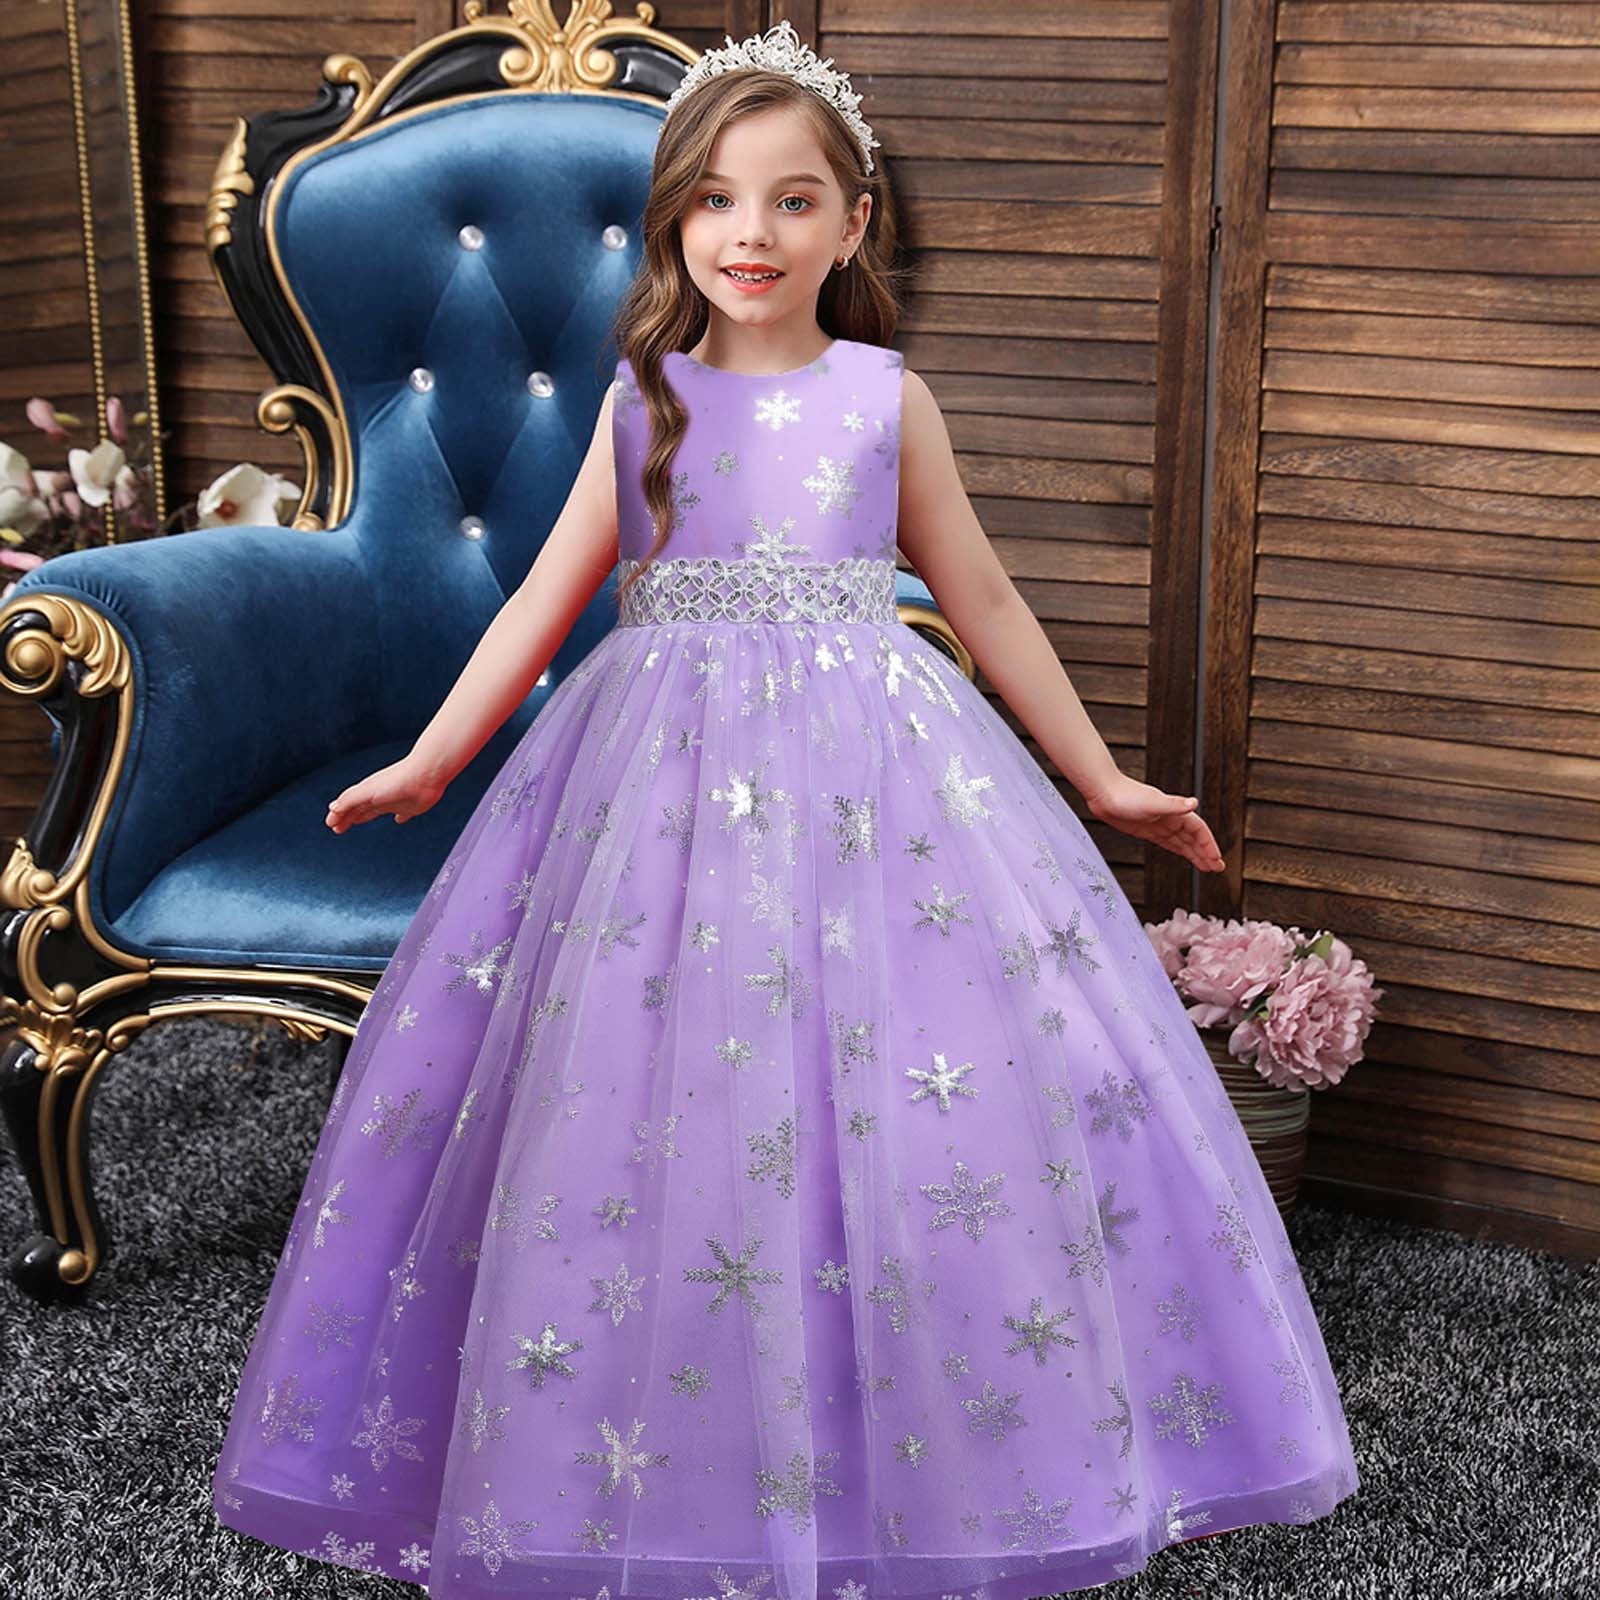 Princess Dress Photoshoot | Prom photoshoot, Photoshoot dress, Ball gowns